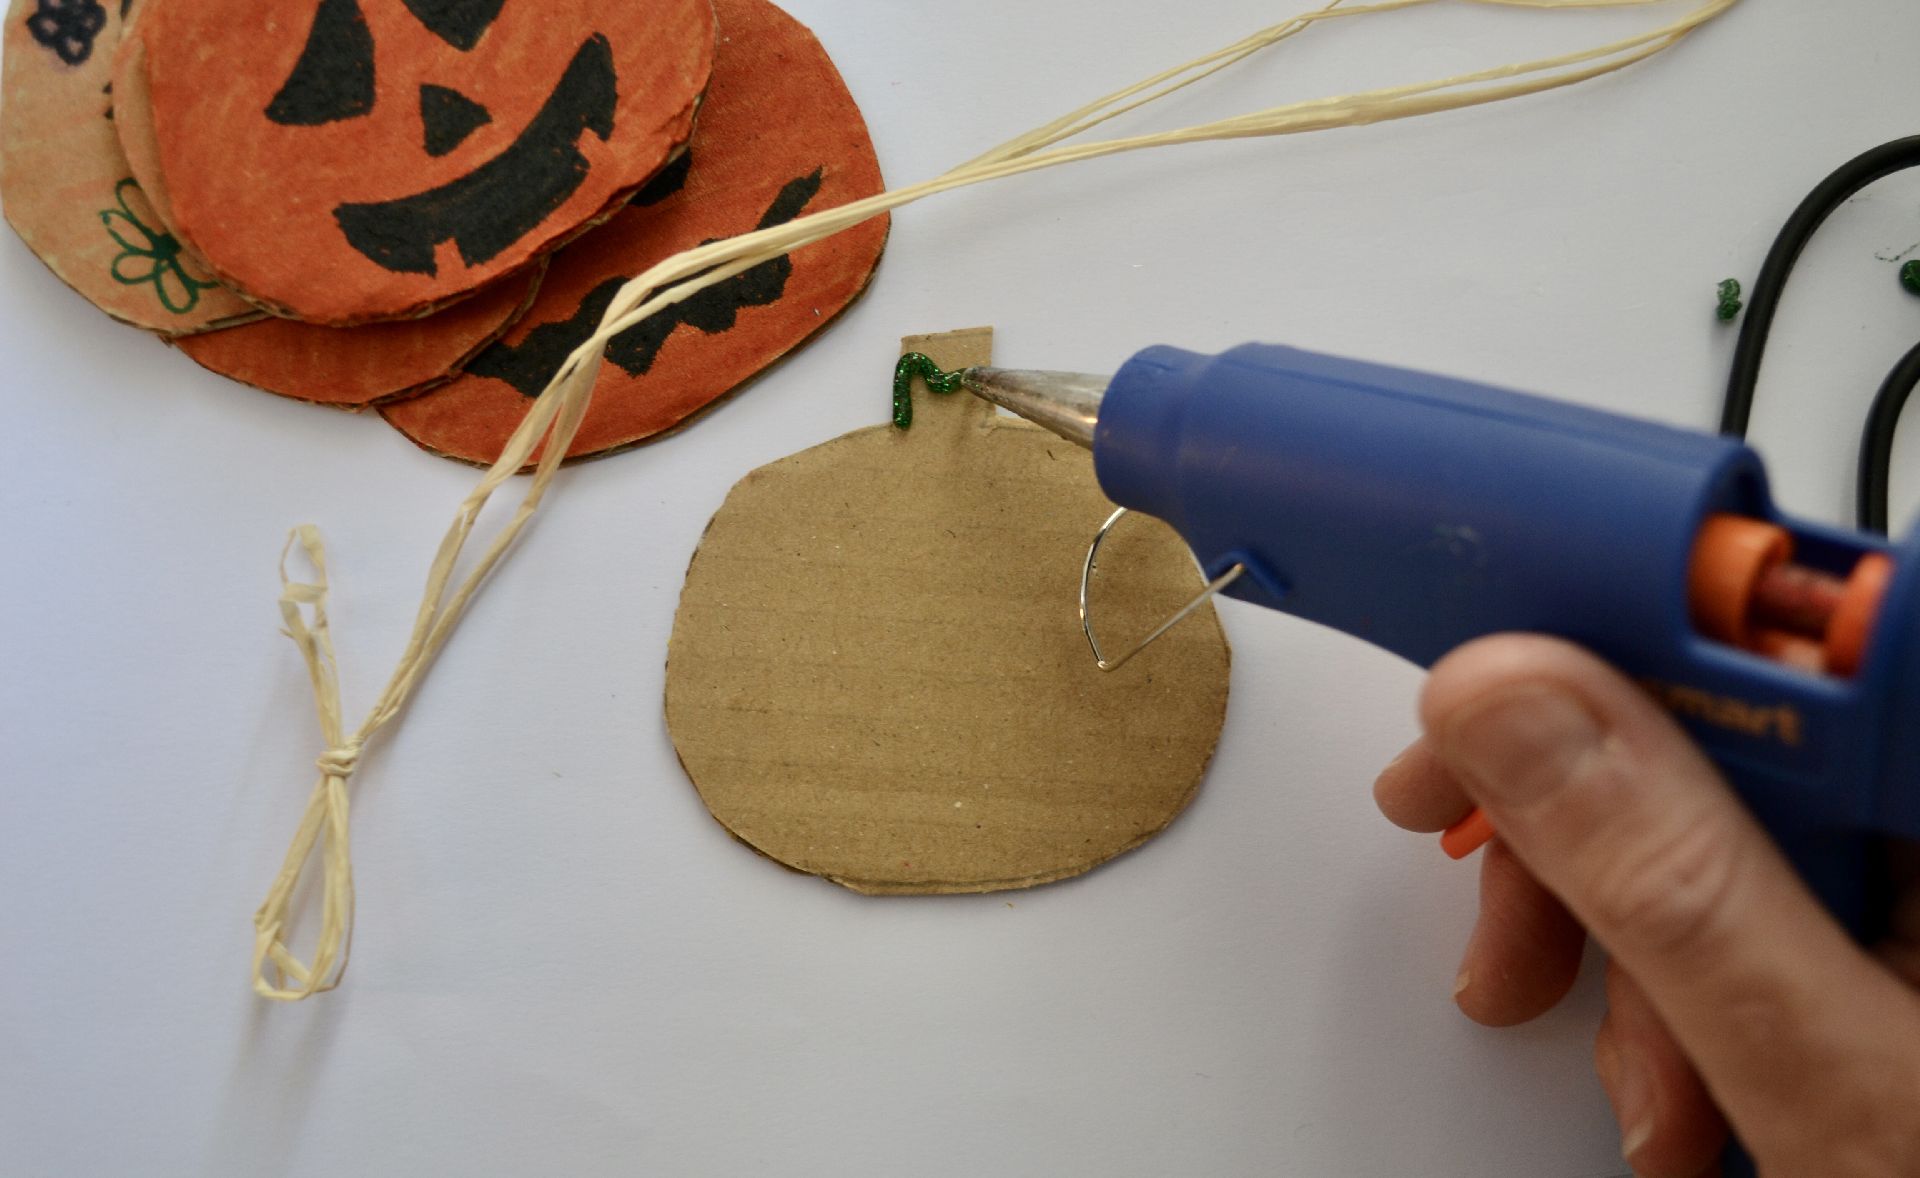 a glue gun applying glue to the back of the cardboard pumpkin